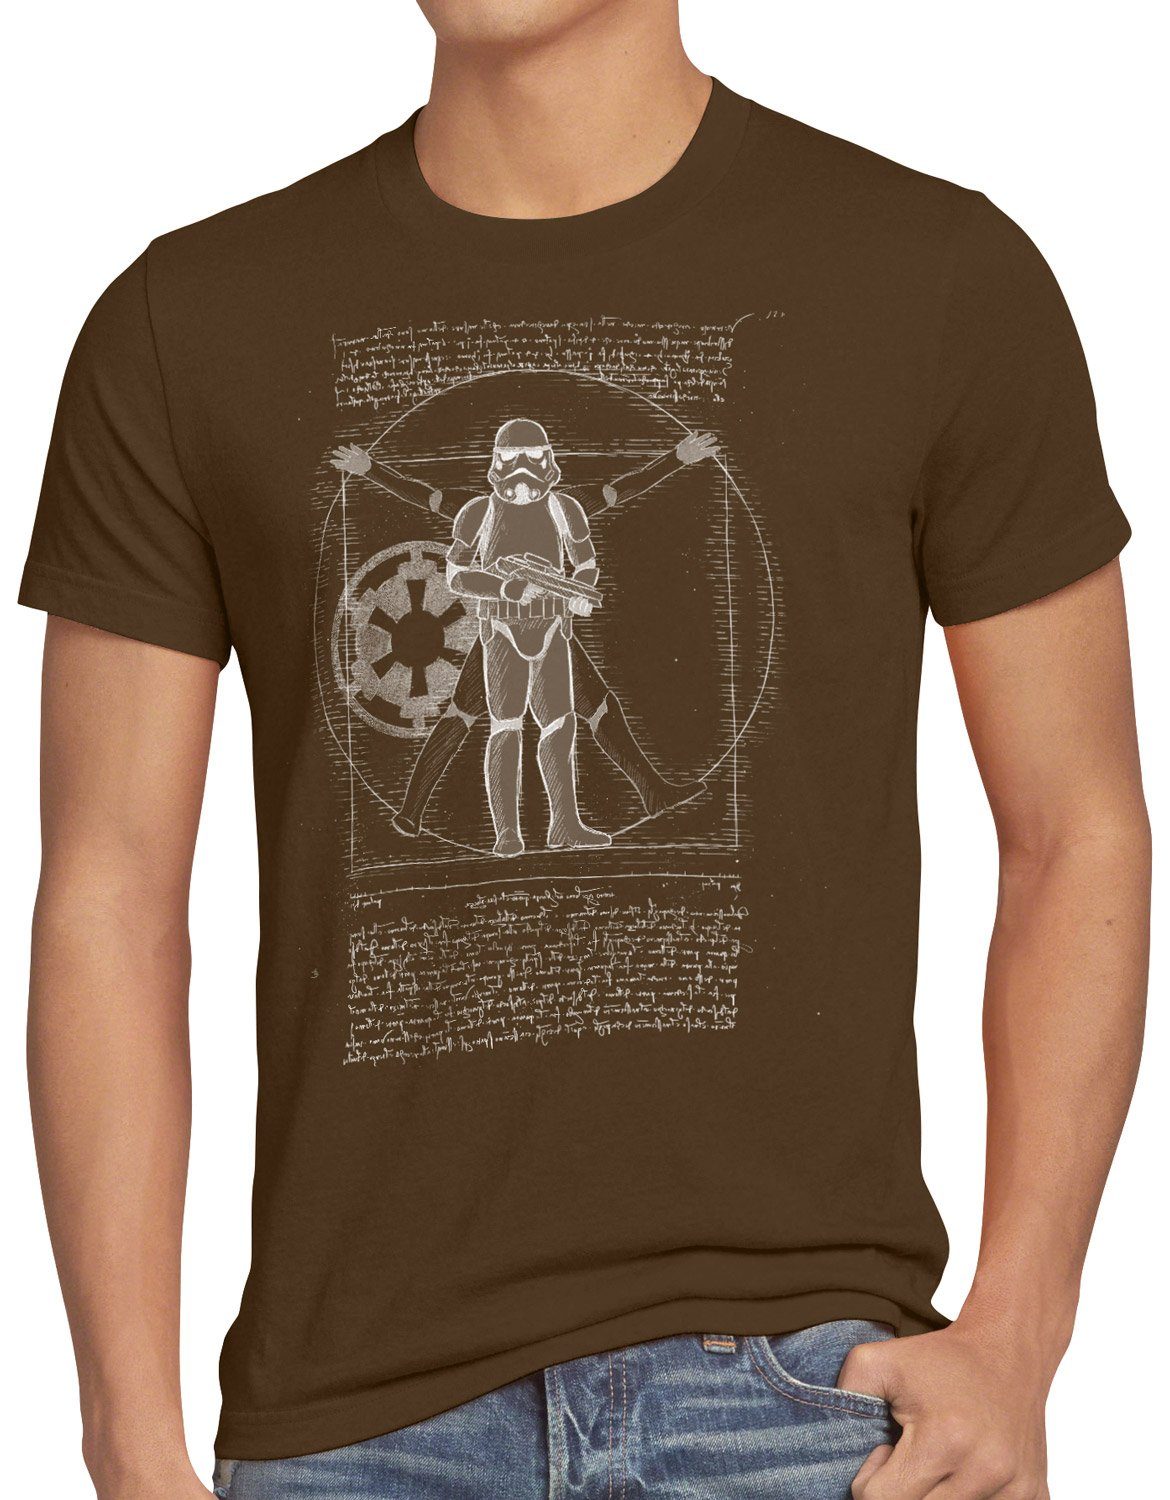 braun Return T-Shirt Print-Shirt Herren empire sturmtruppen imperium Vitruvianische style3 Stormtrooper